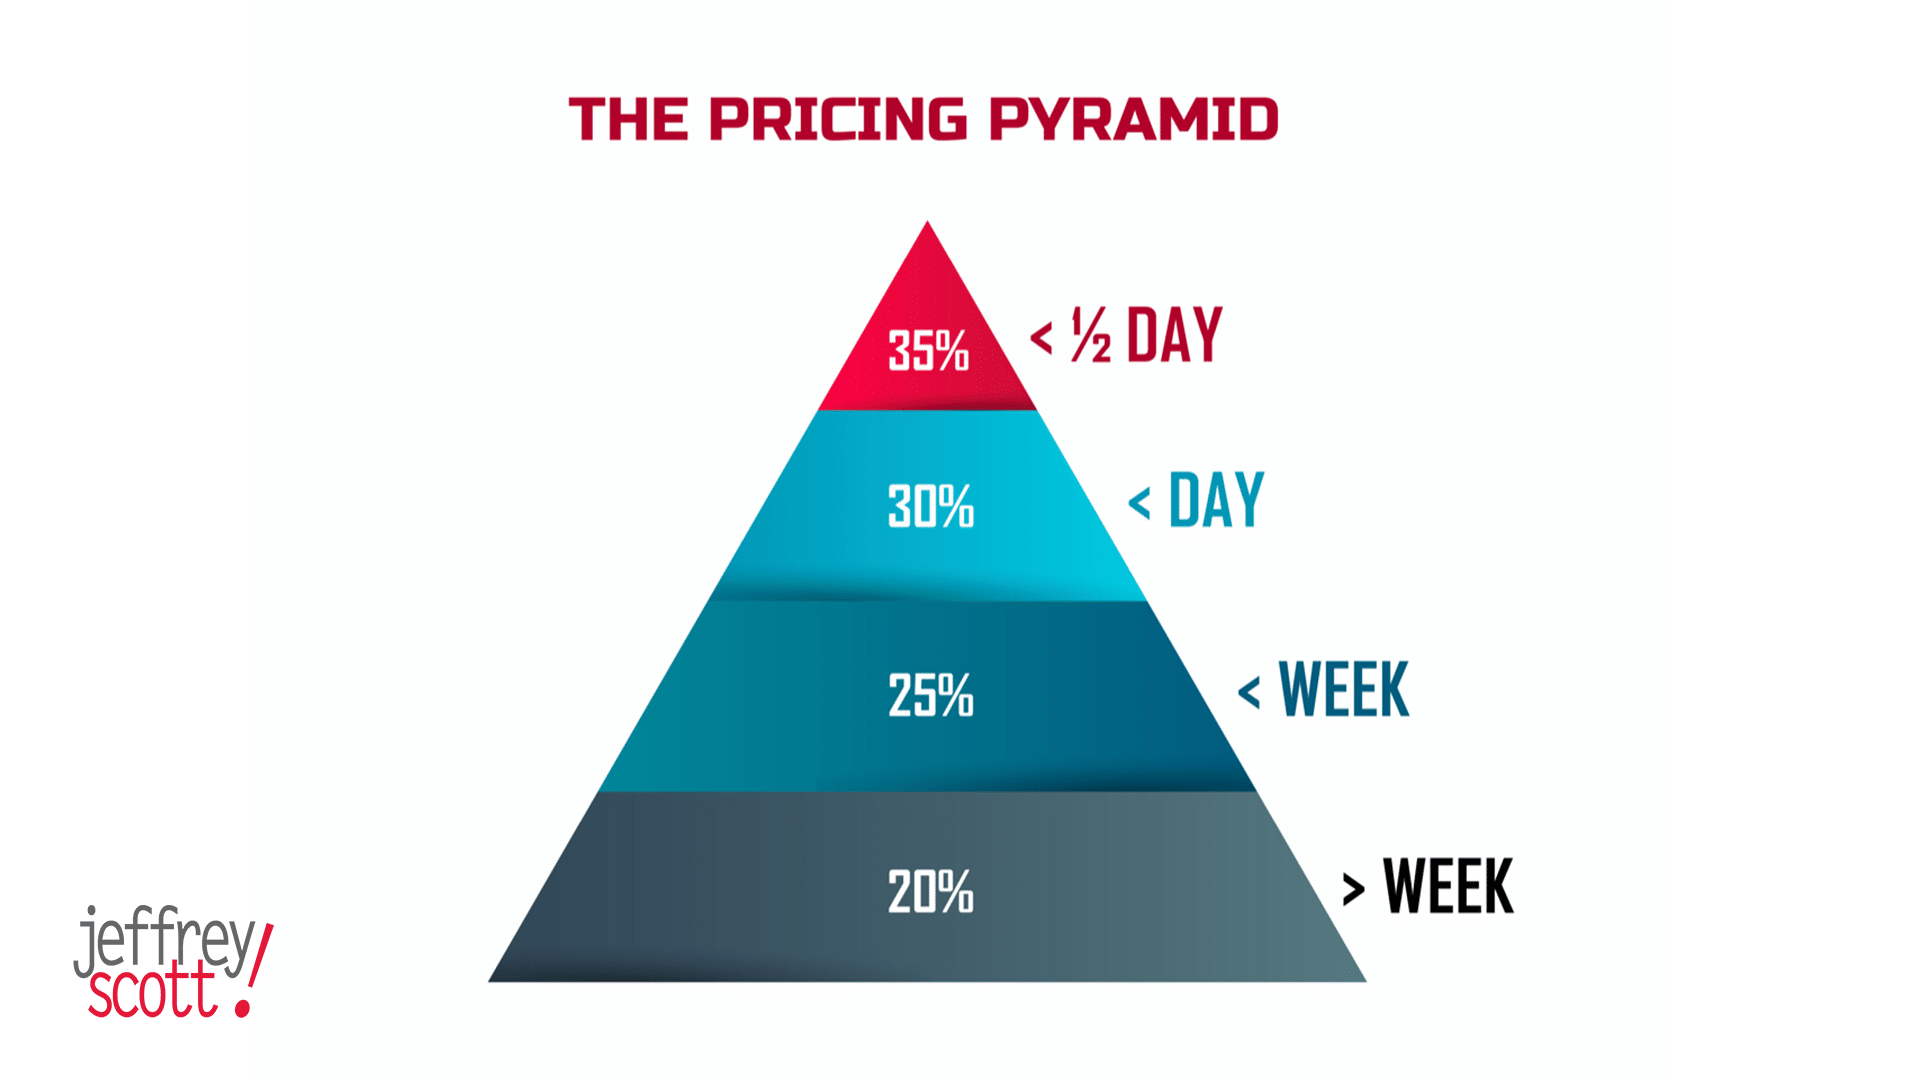 Jeffrey Scott Pricing Pyramid